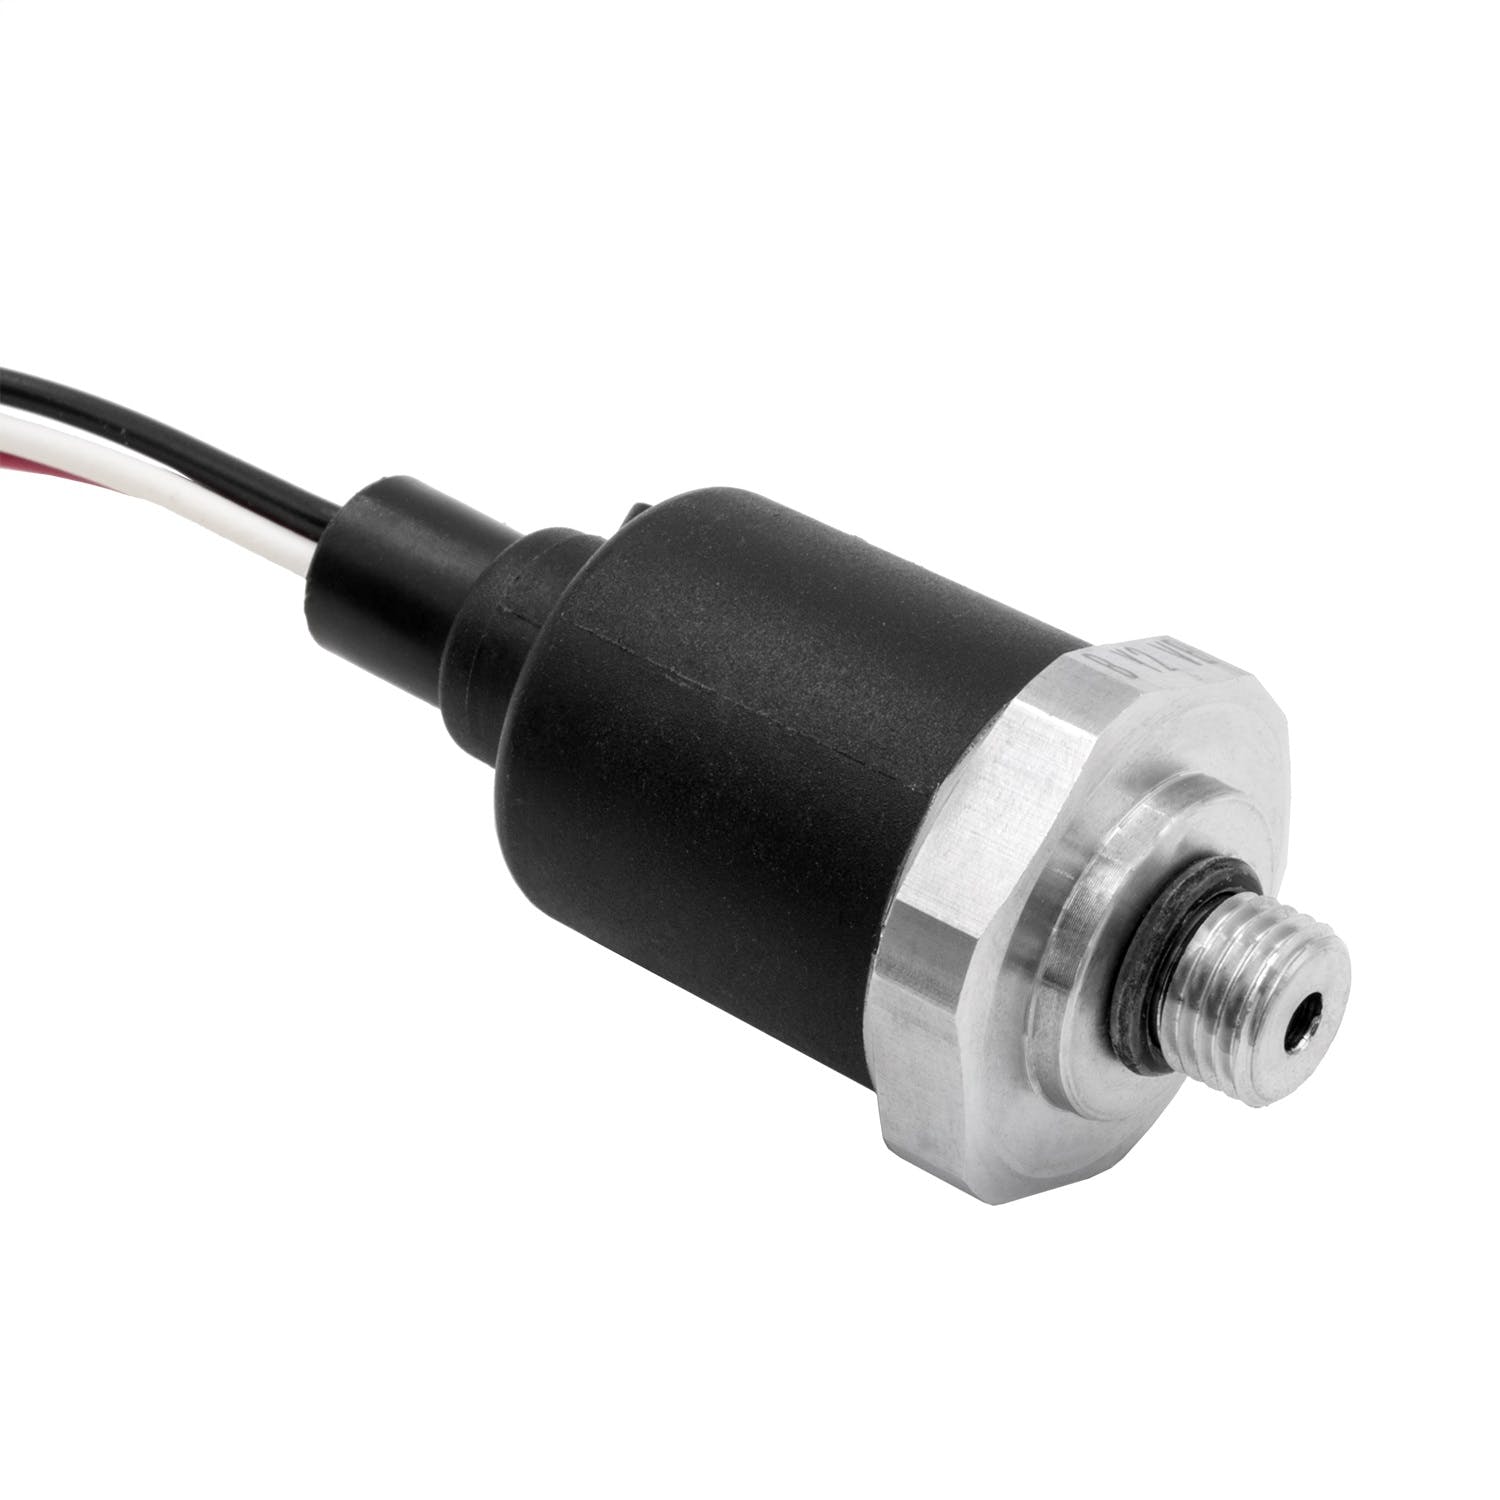 AutoMeter Products P13126 Spek Pro Pressure Sensor 0-30 PSI, 3/8-24, Ashcroft